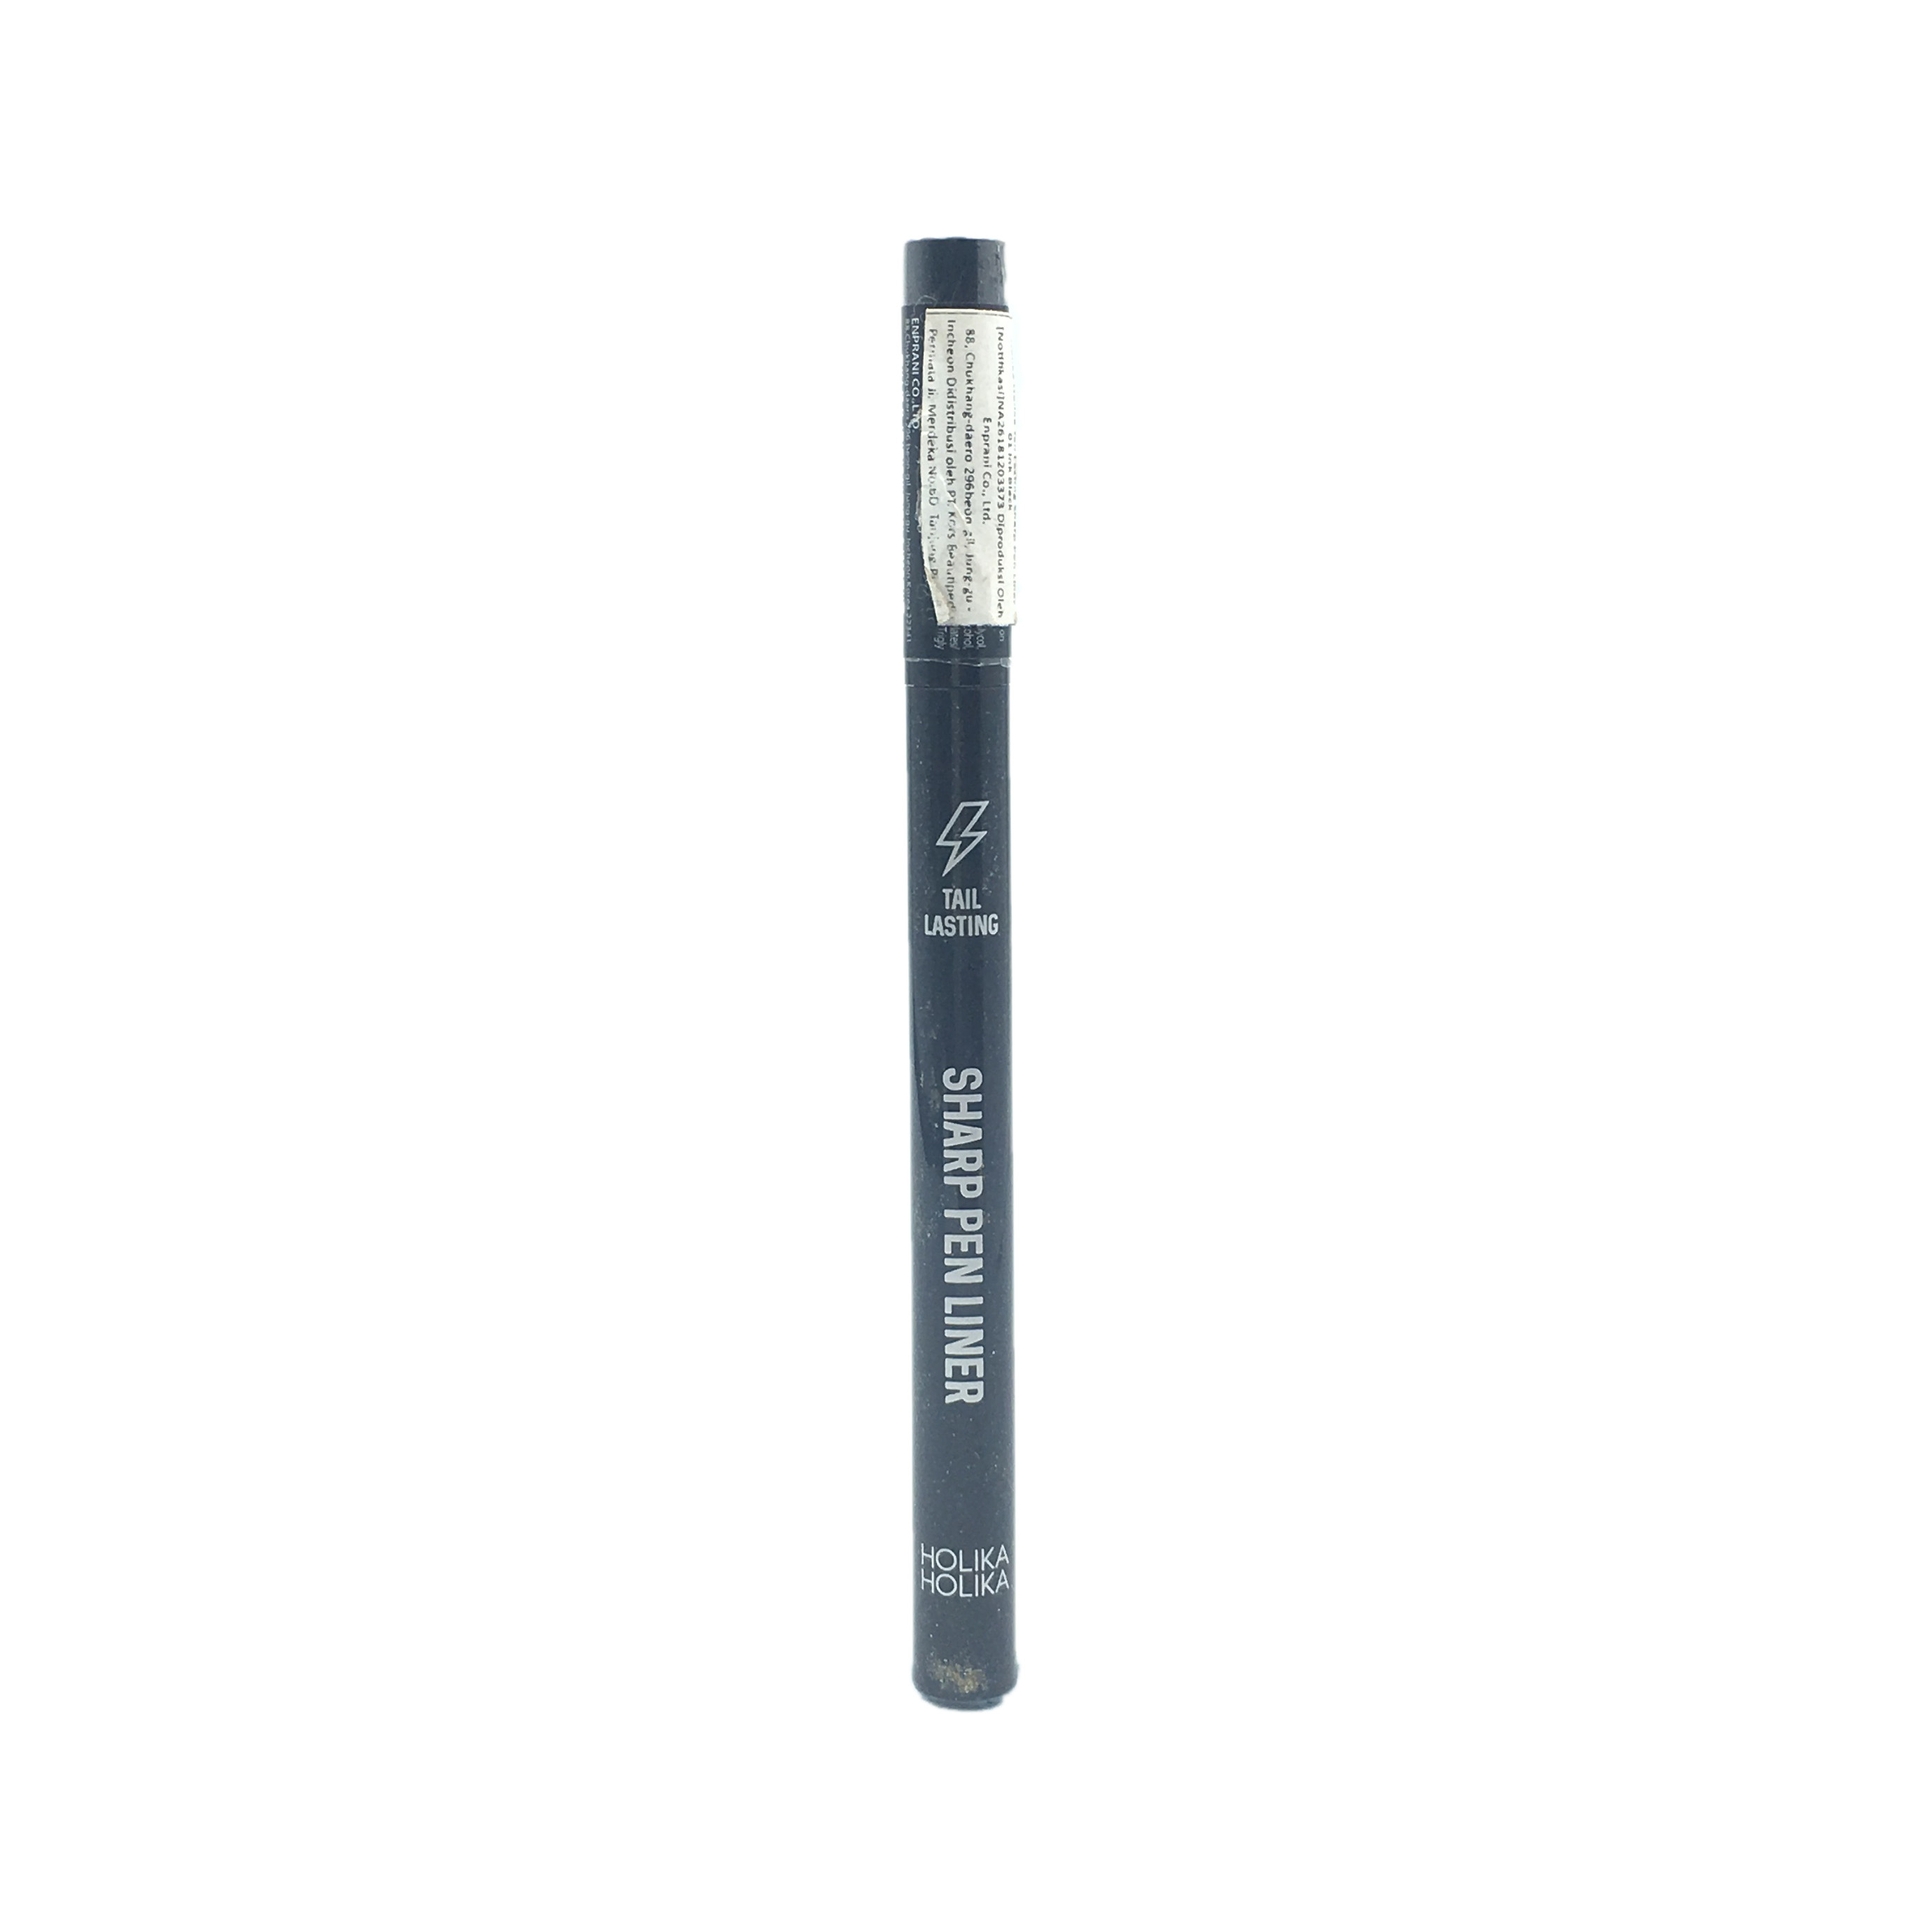 Holika Holika Tail Lasting Sharp Pen Liner 01.Ink Black Eyes